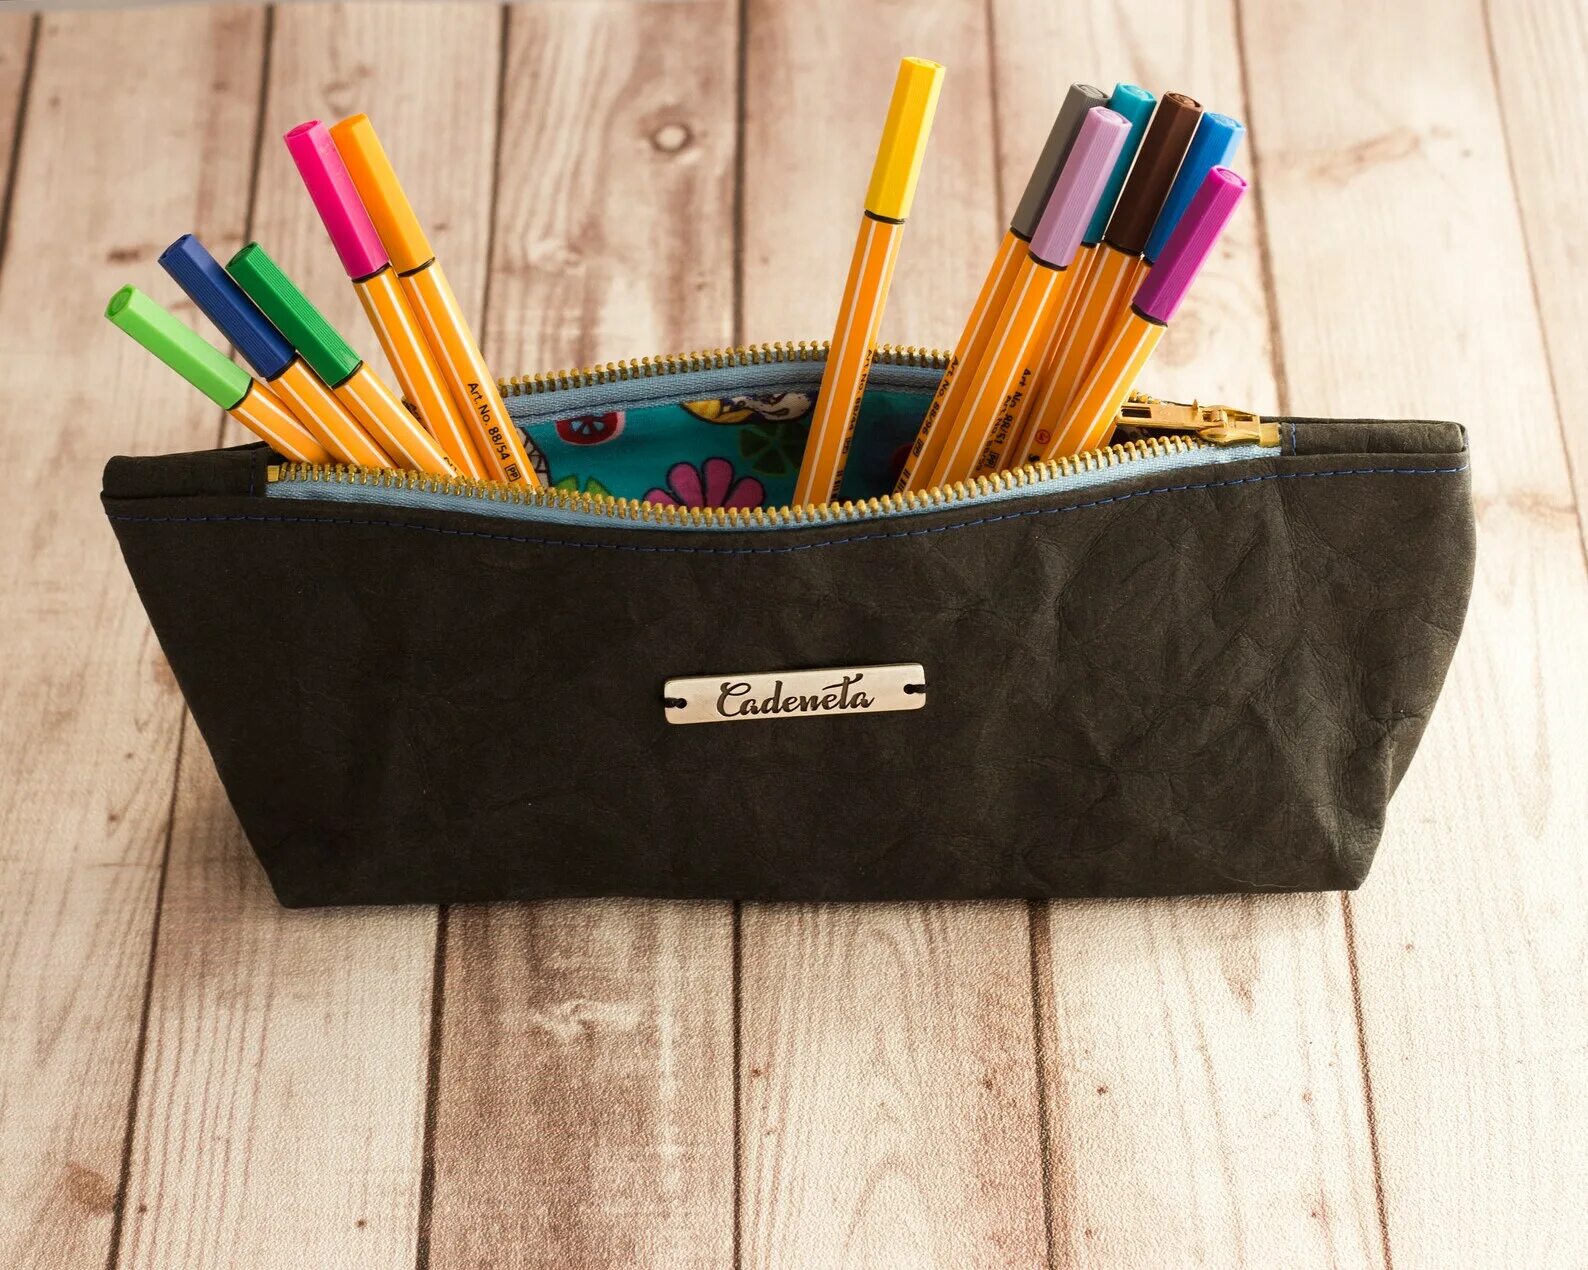 4 pencils cases. Pencil Case. Бумажный чехол для карандаша. Pencil Case g. Make a Pencil Case.